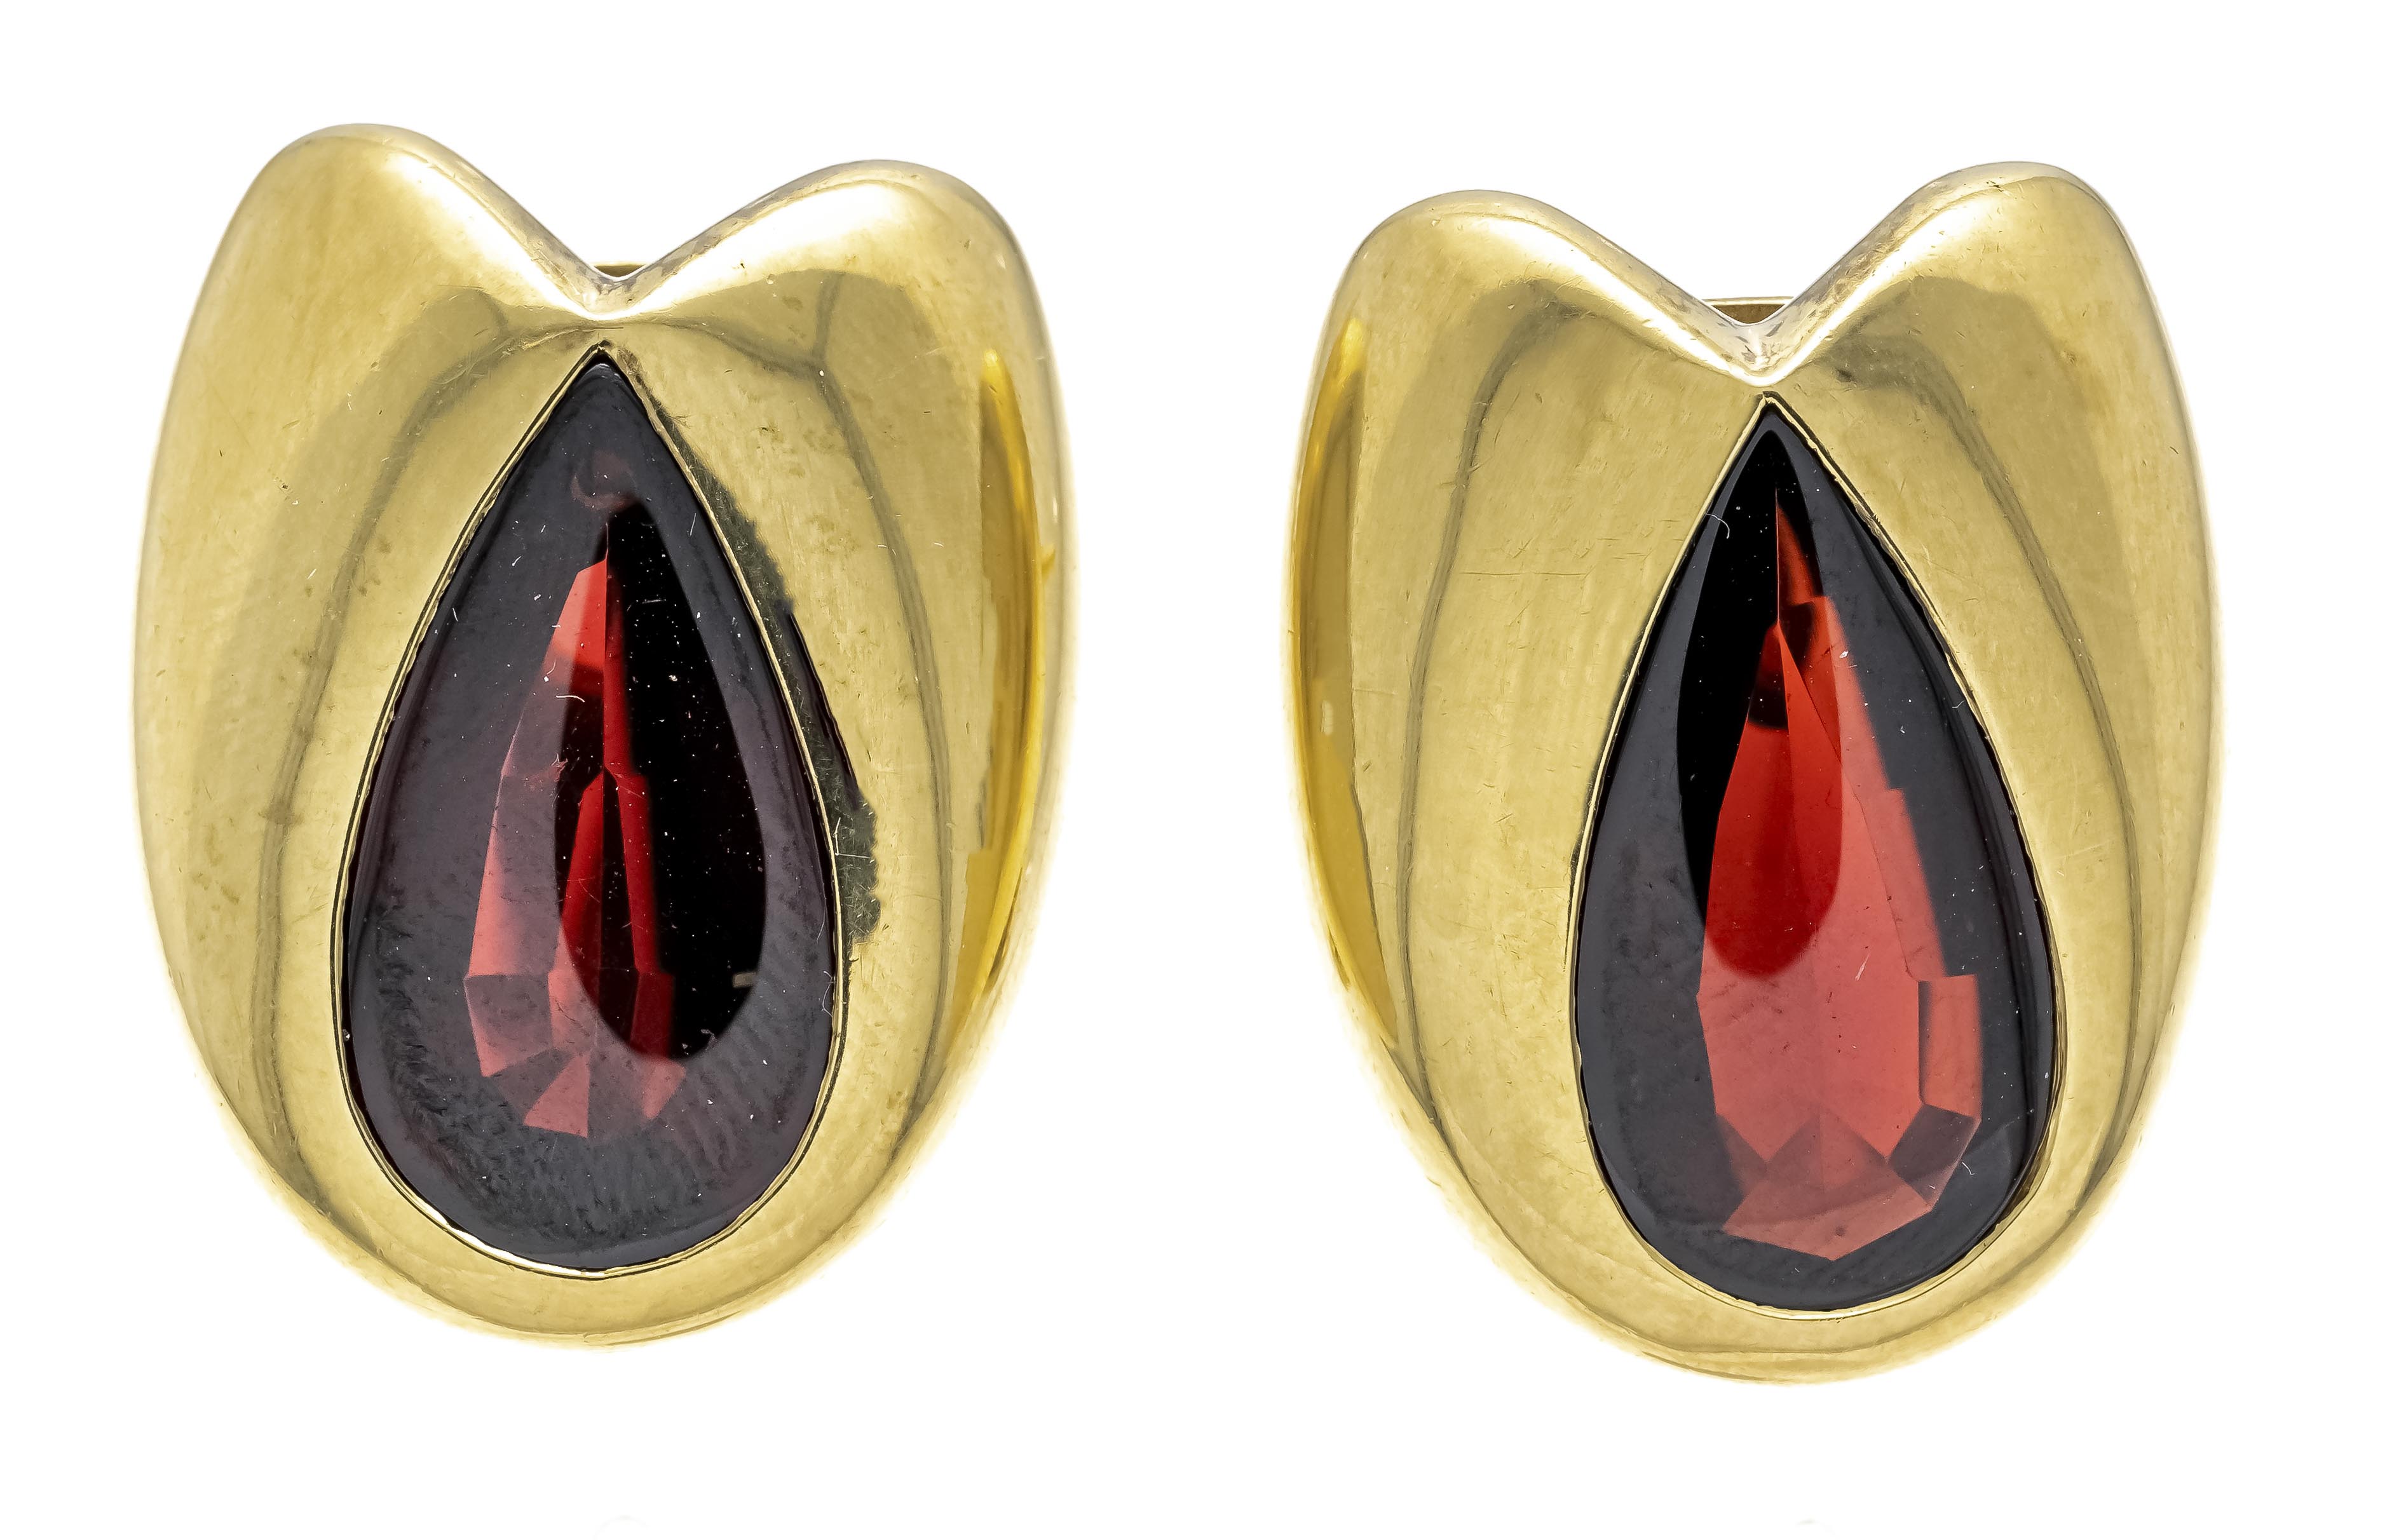 Garnet clip ear studs GG 750/000, each with a large, fine drop-shaped garnet cabochon 21 x 11 mm, l.